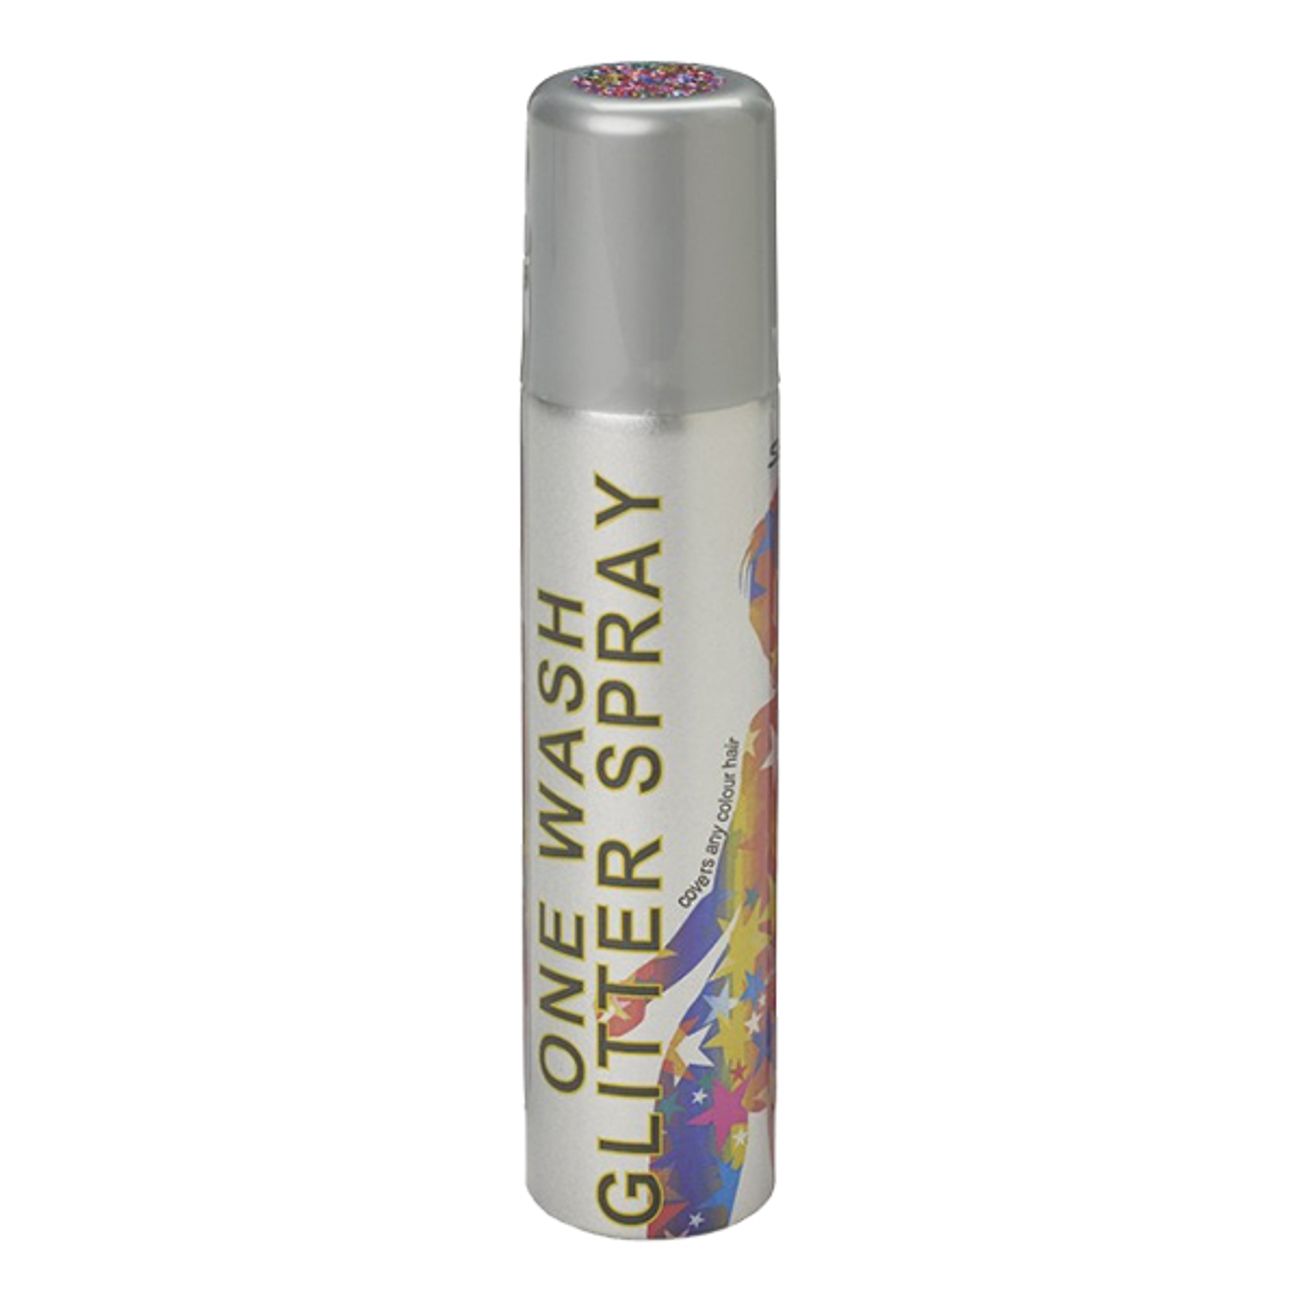 stargazer-glitterspray-7